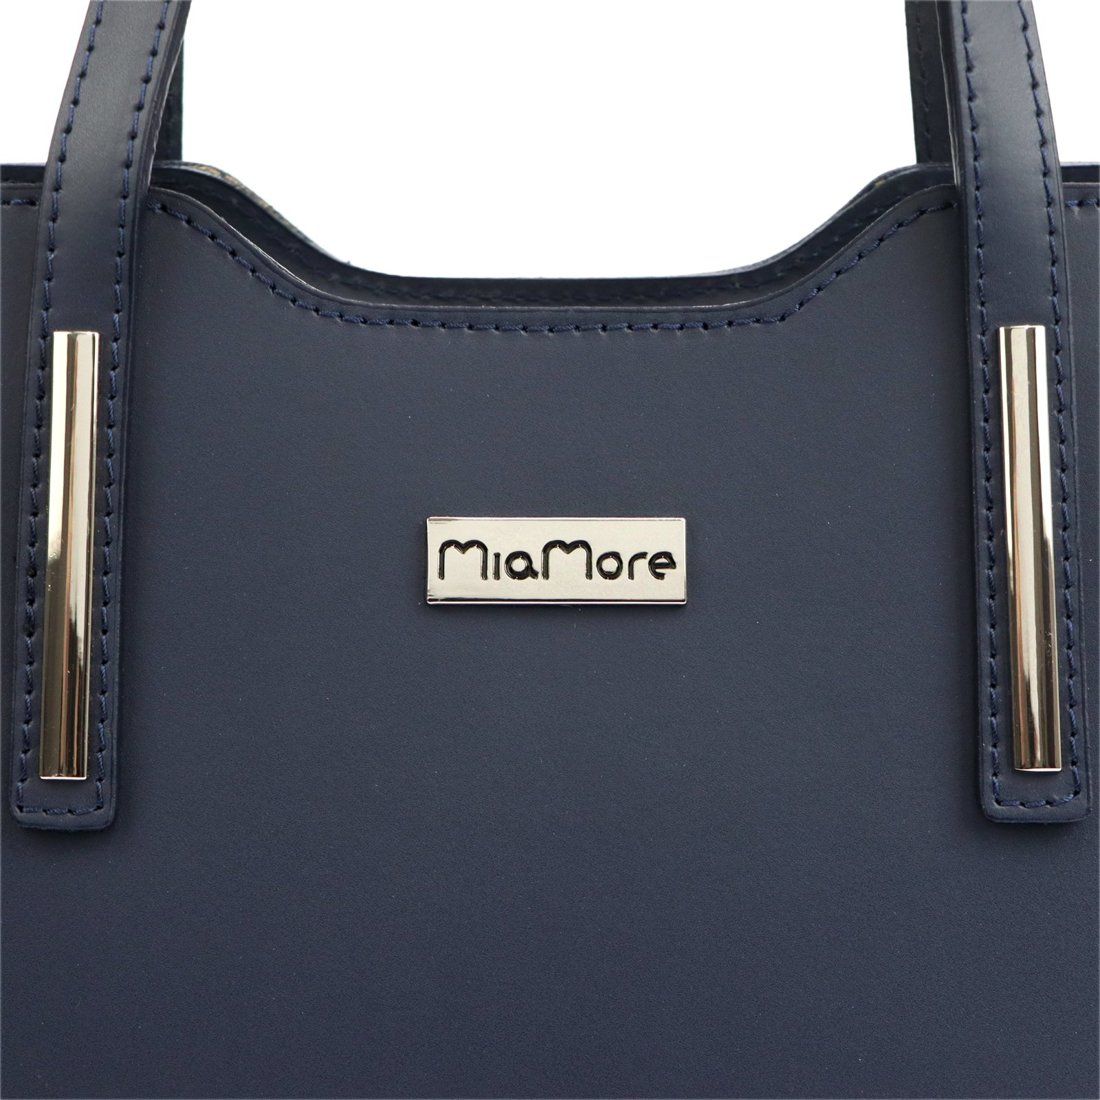 MiaMore women's leather handbag